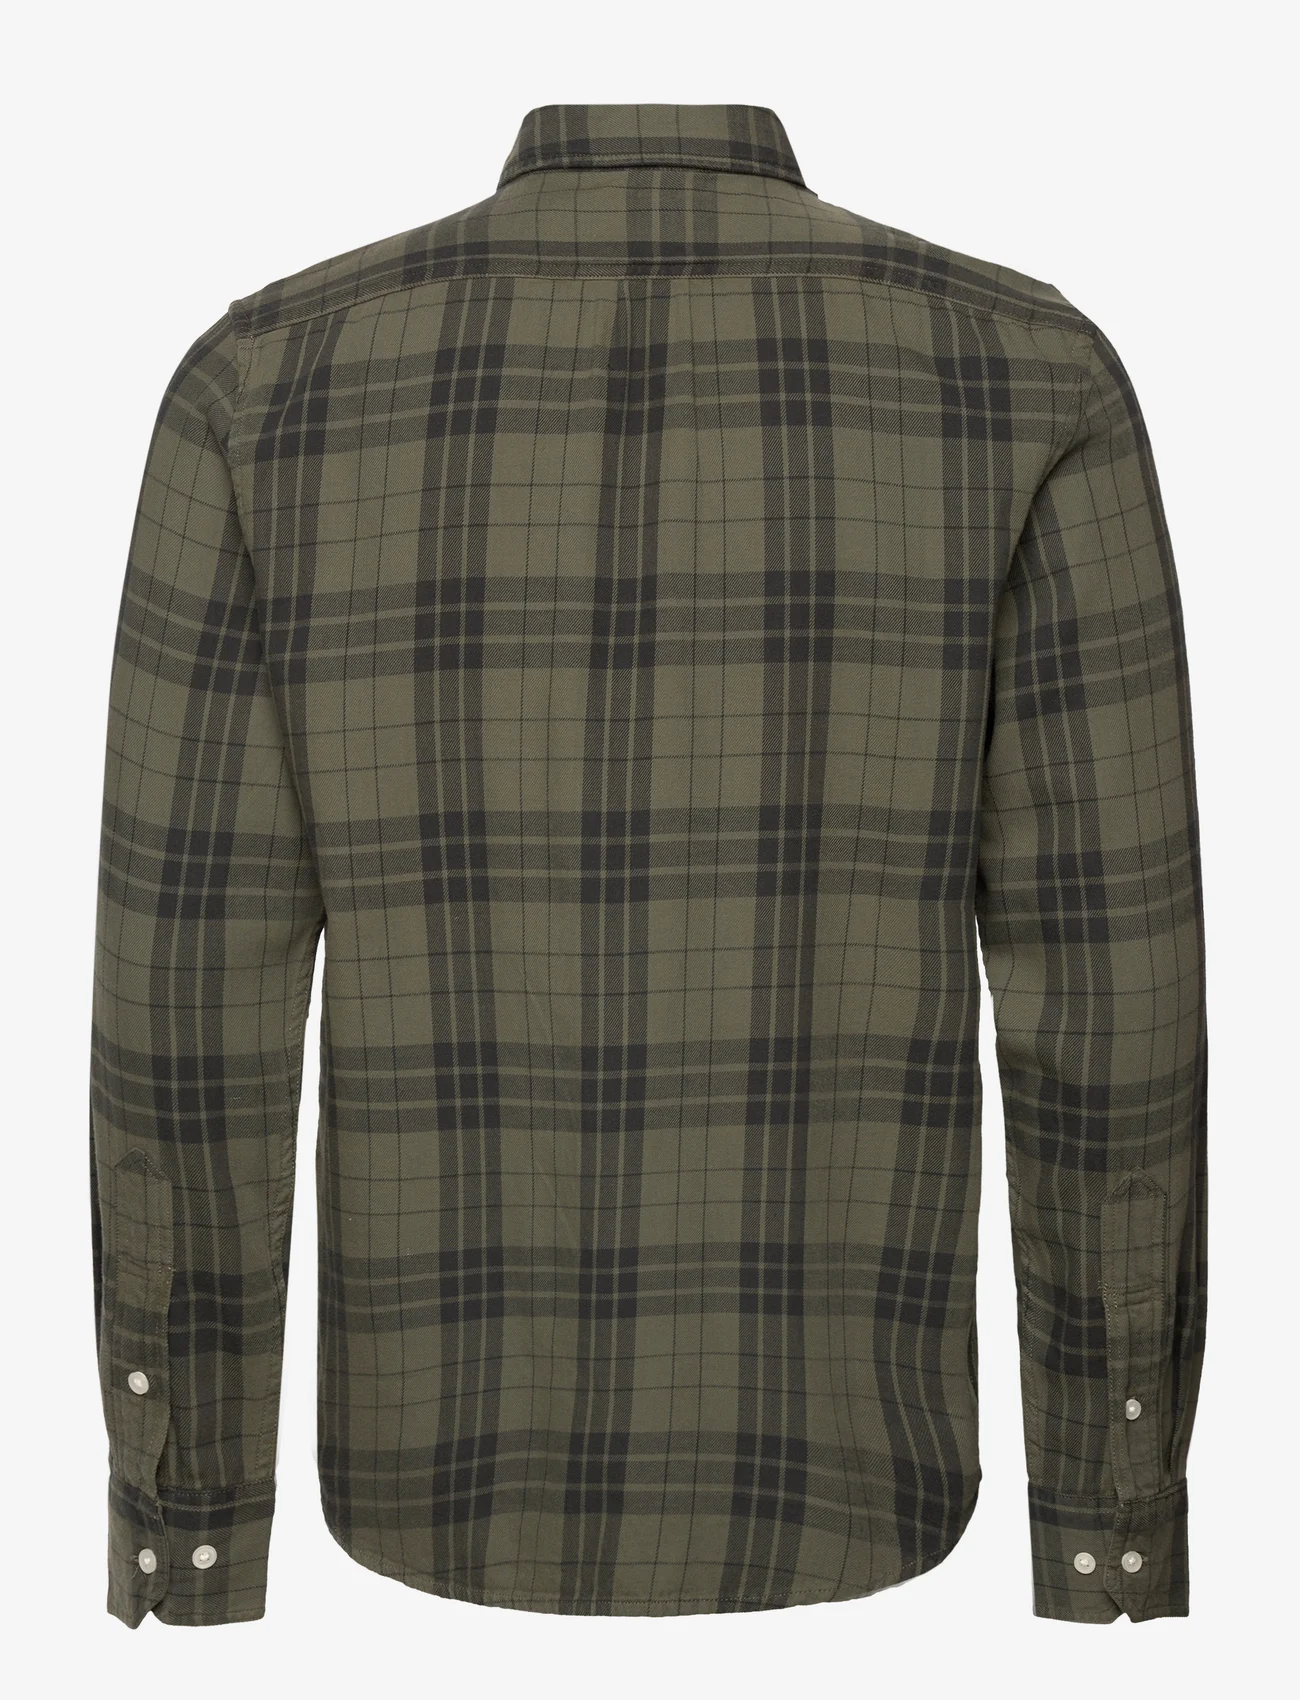 Lee Jeans - LEESURE SHIRT - rutiga skjortor - olive grove - 1